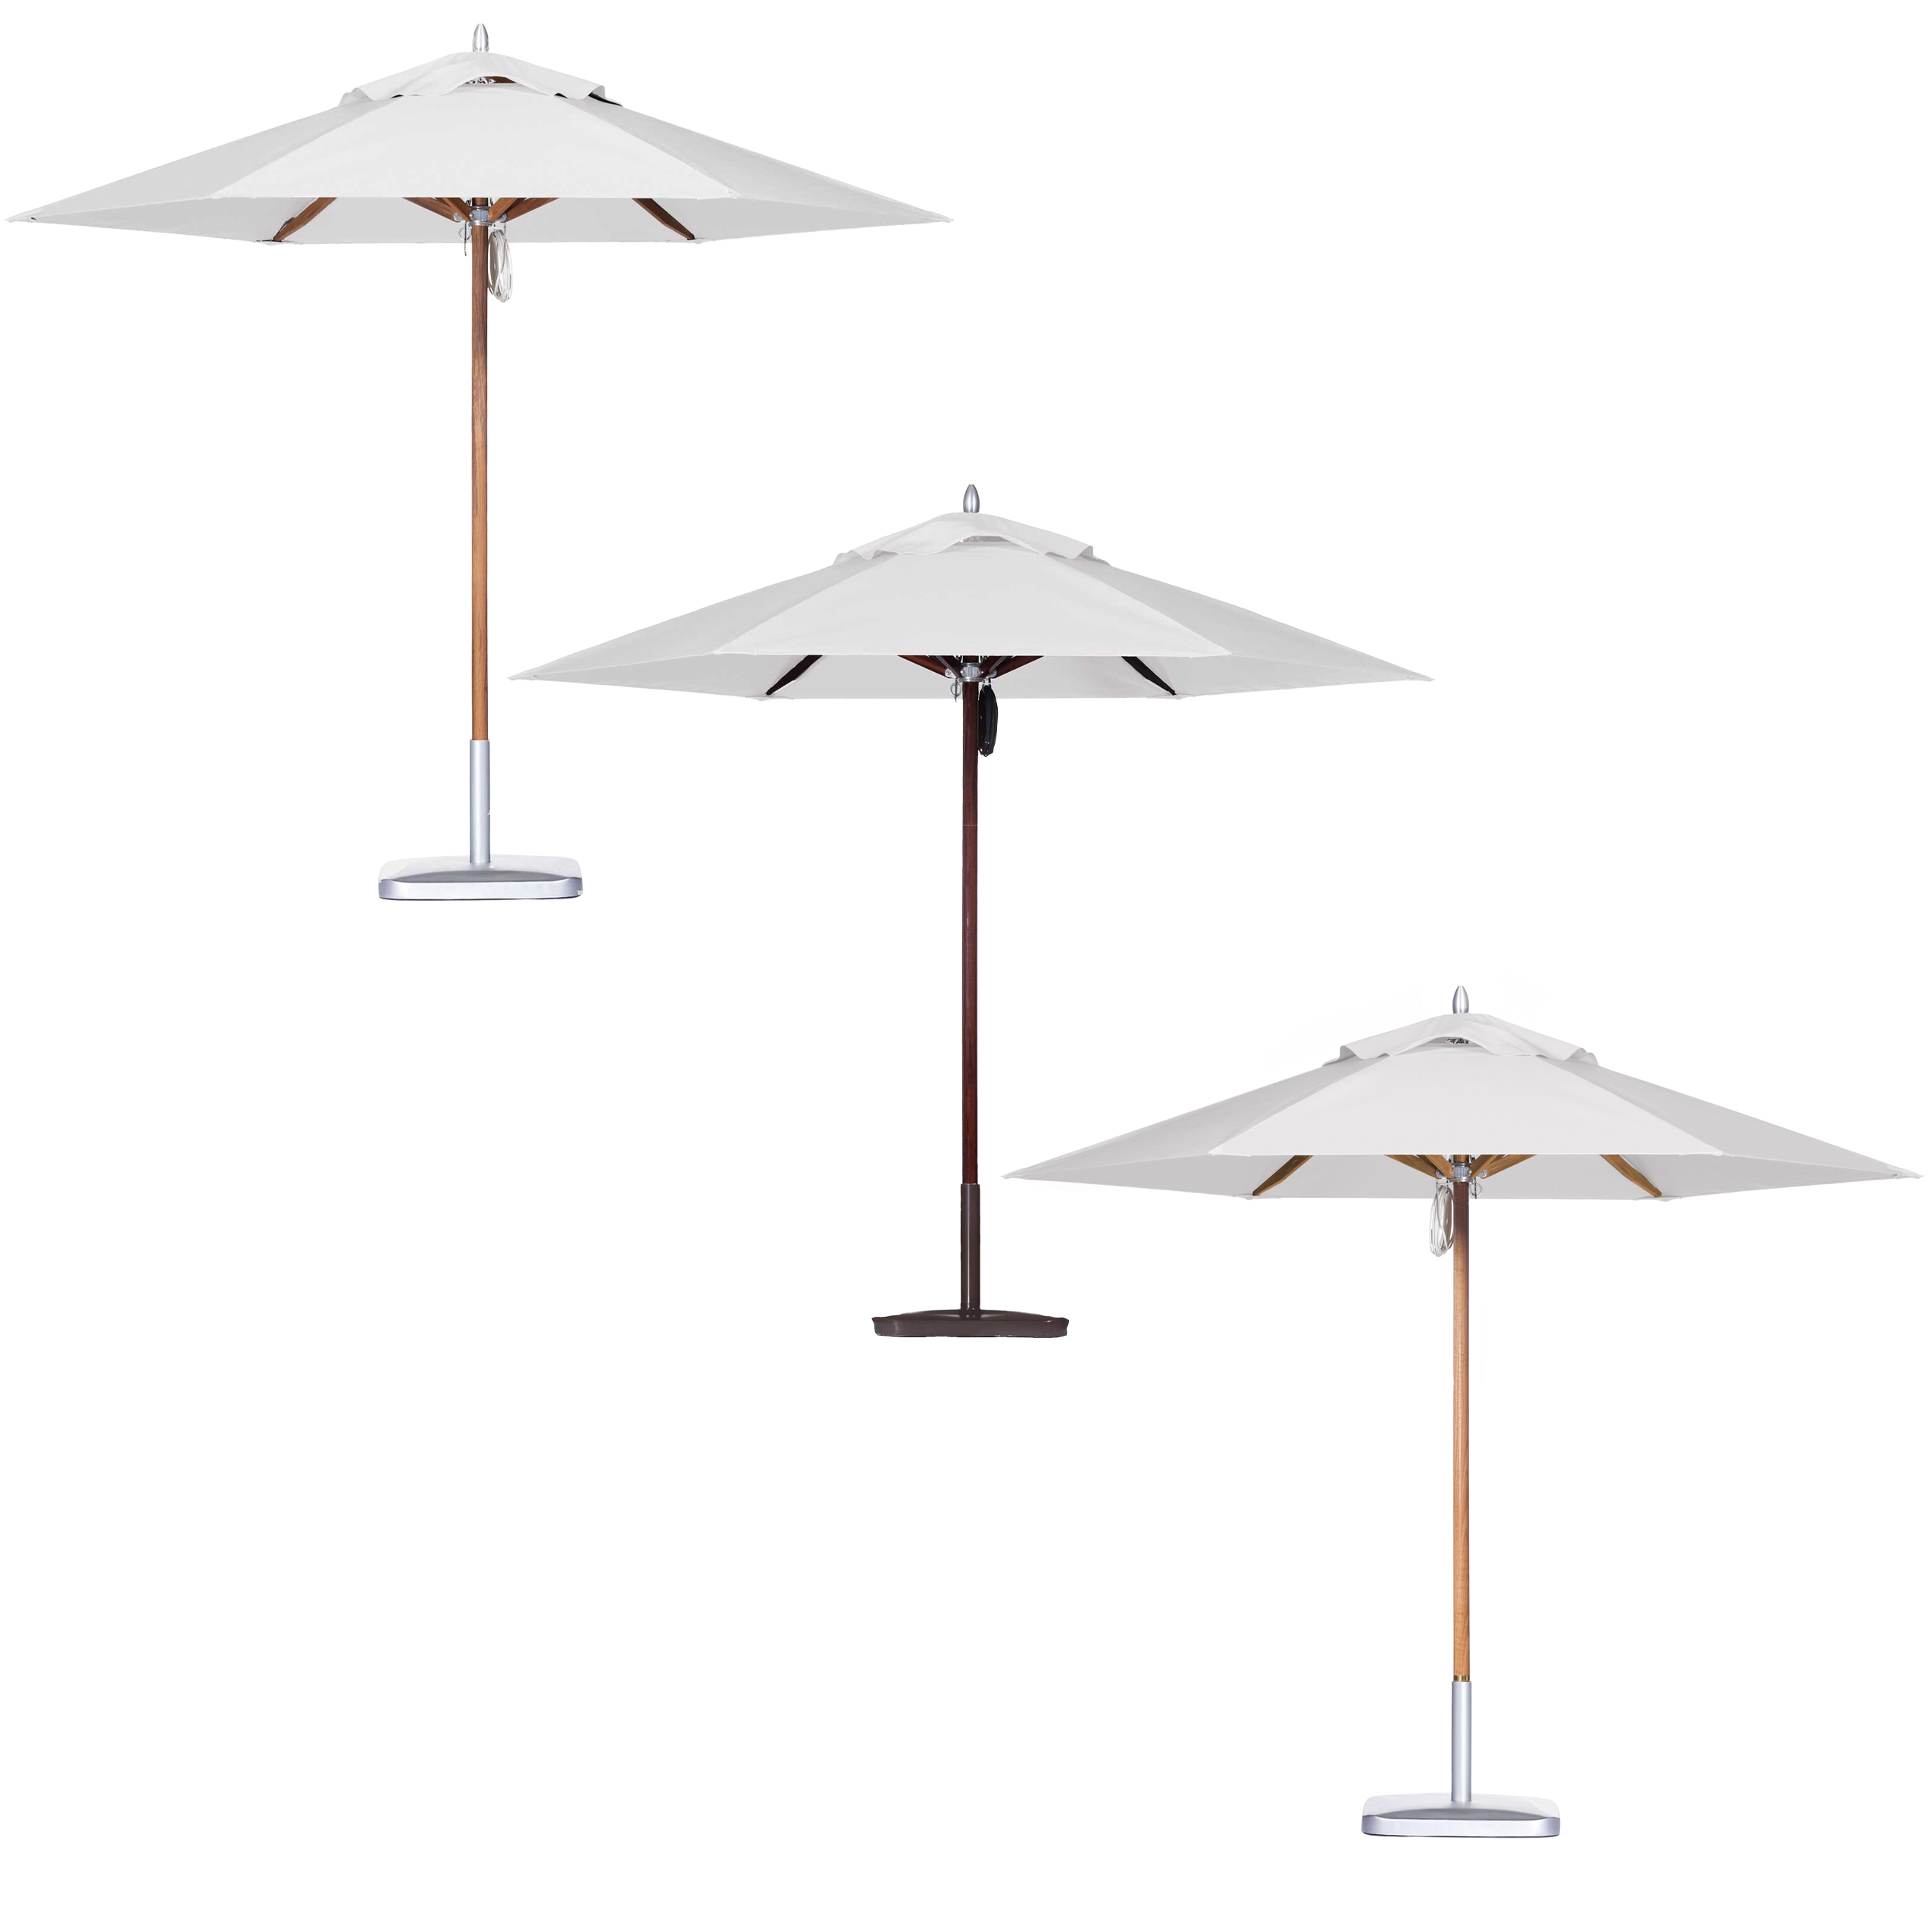 Image of three wood umbrellas